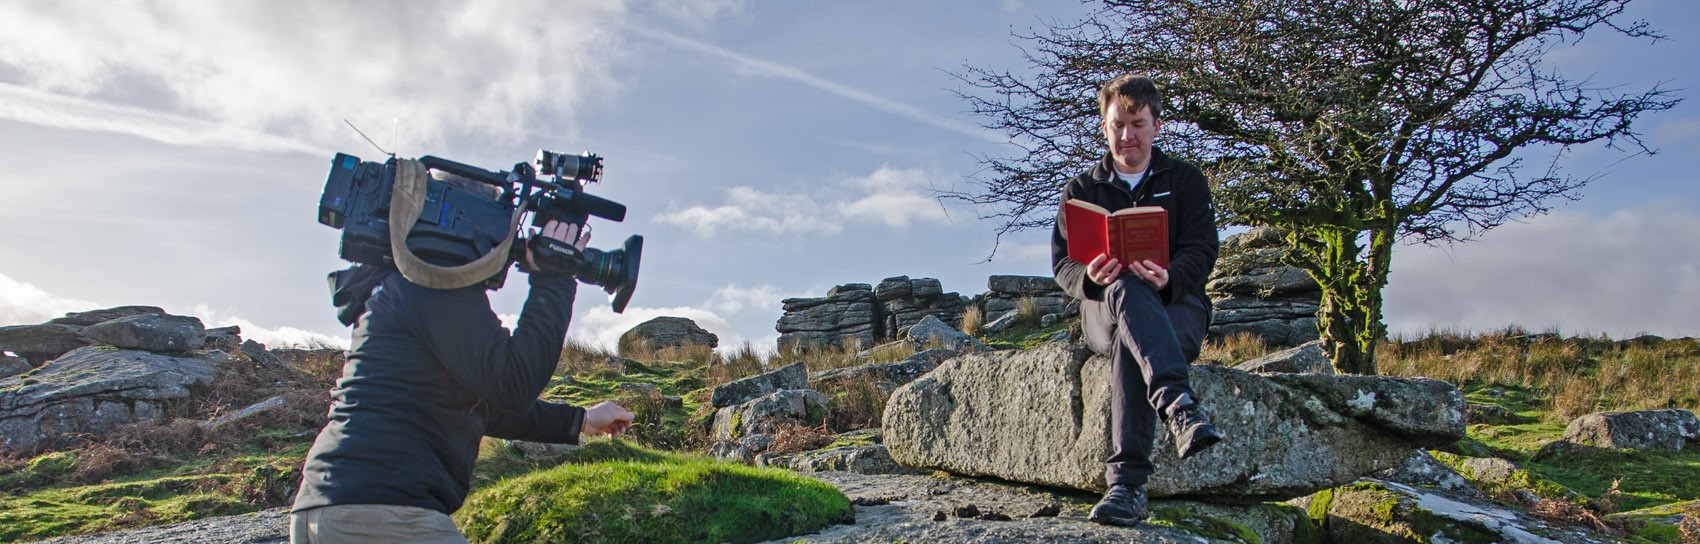 Filming on Dartmoor. Photograph by ALEX GRAEME